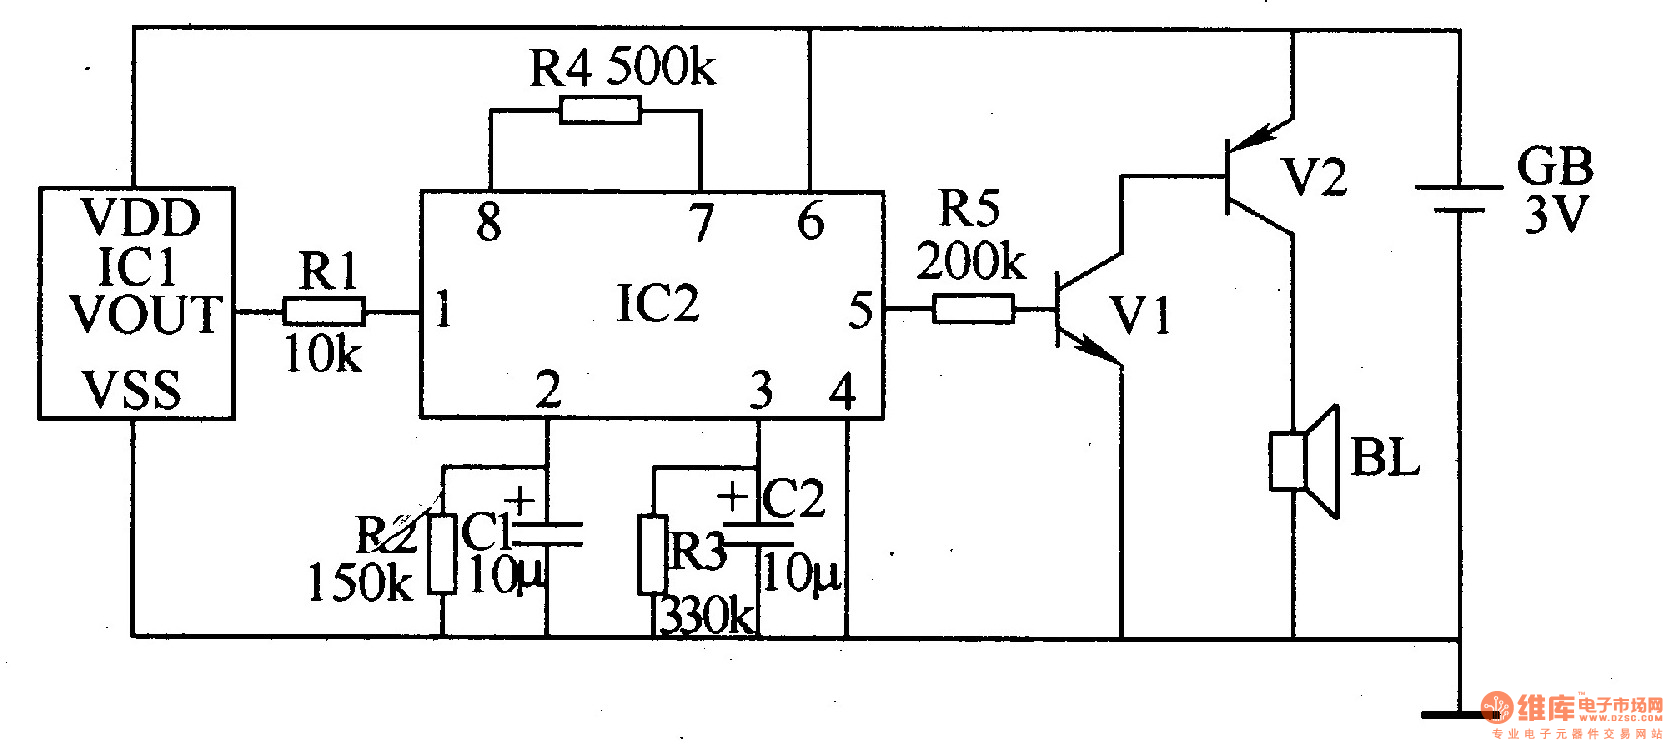 s9013 wiring diagram